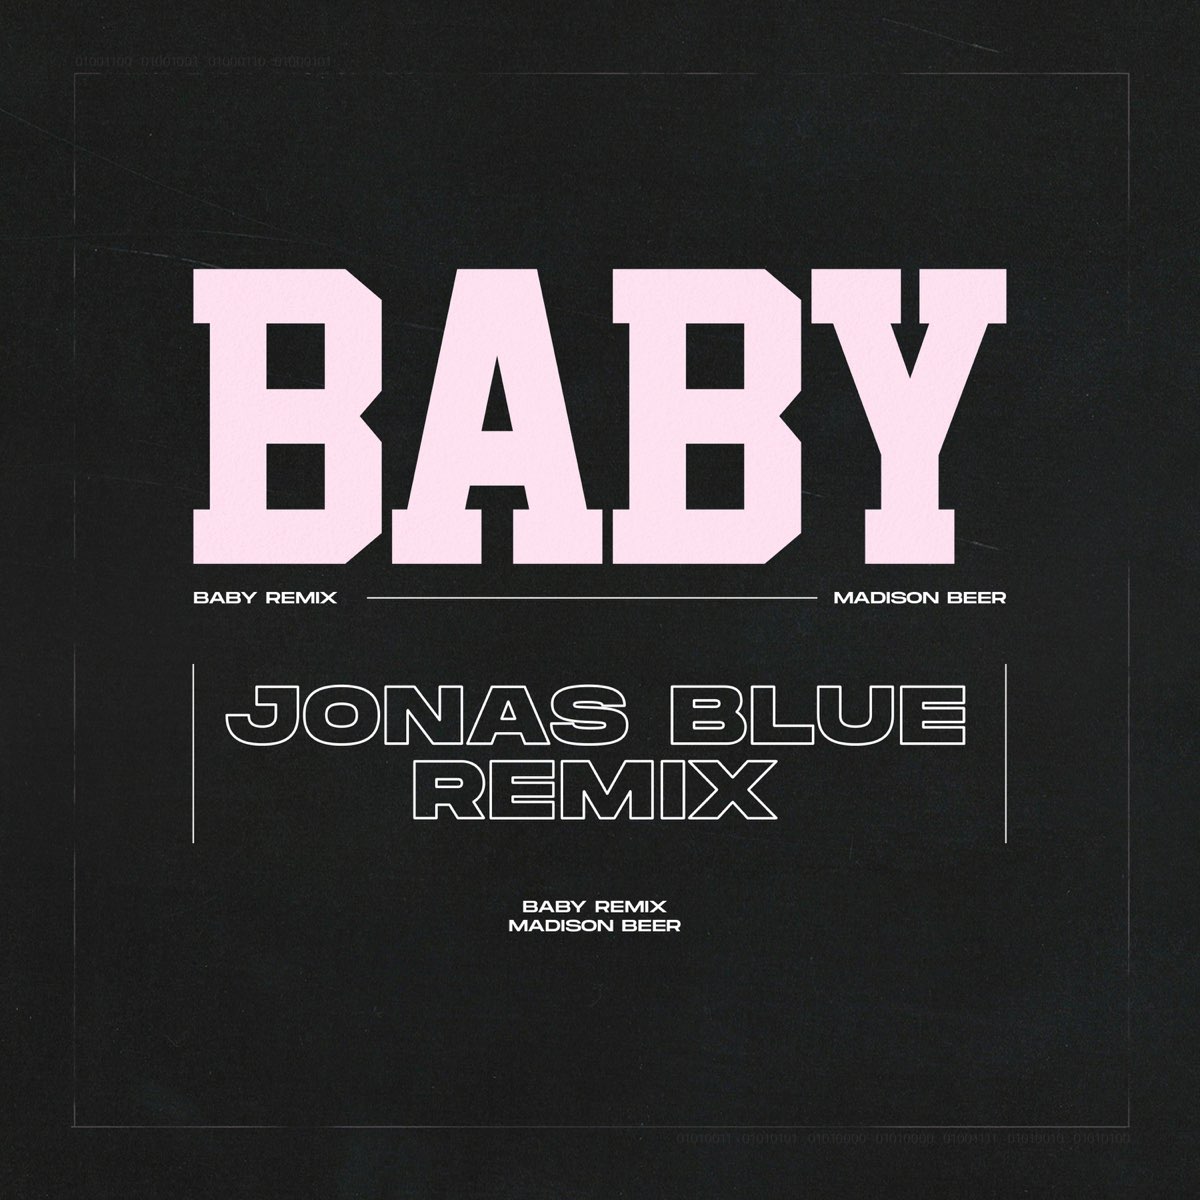 Madison Beer — Baby (Jonas Blue Remix) cover artwork